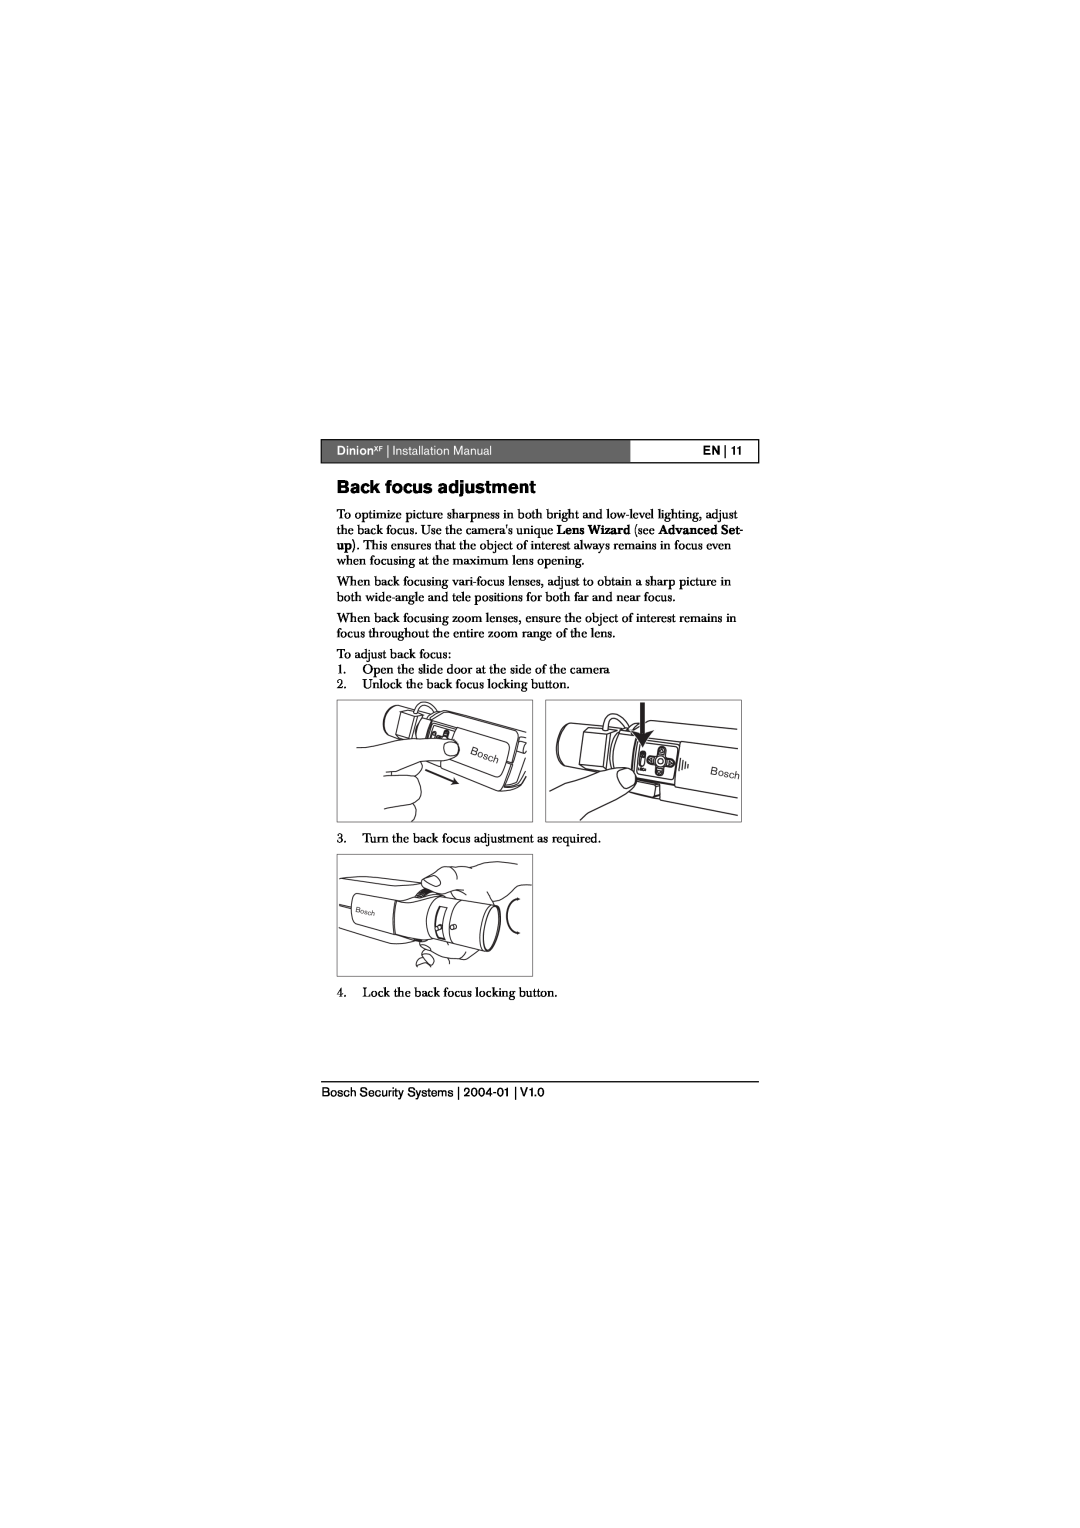 Bosch Appliances LTC 0620, LTC 0495 installation instructions Back focus adjustment, DinionXF Installation Manual 